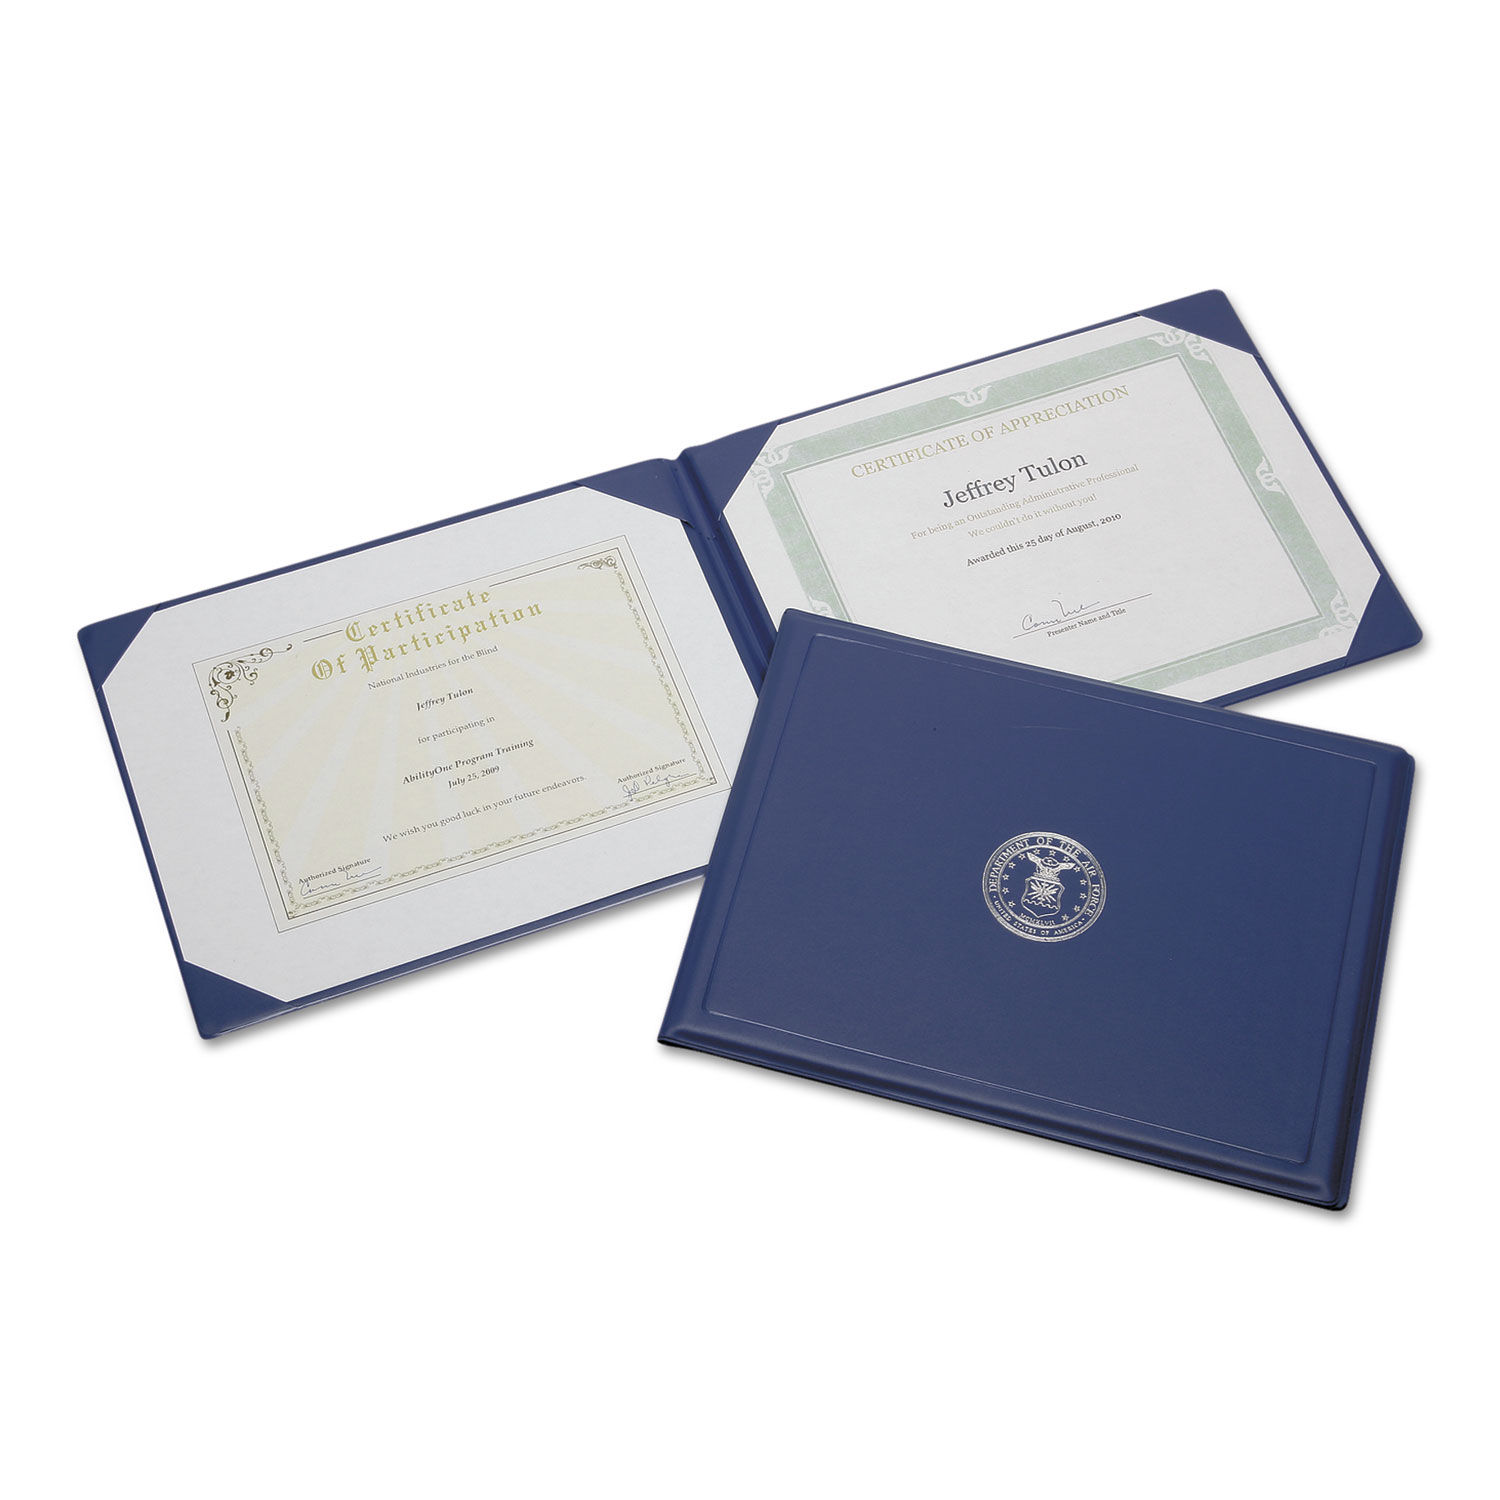 SKILCRAFT Award Certificate Binder 8.5 x 11, Air Force Seal, Blue/Silver, GSA 751000115325